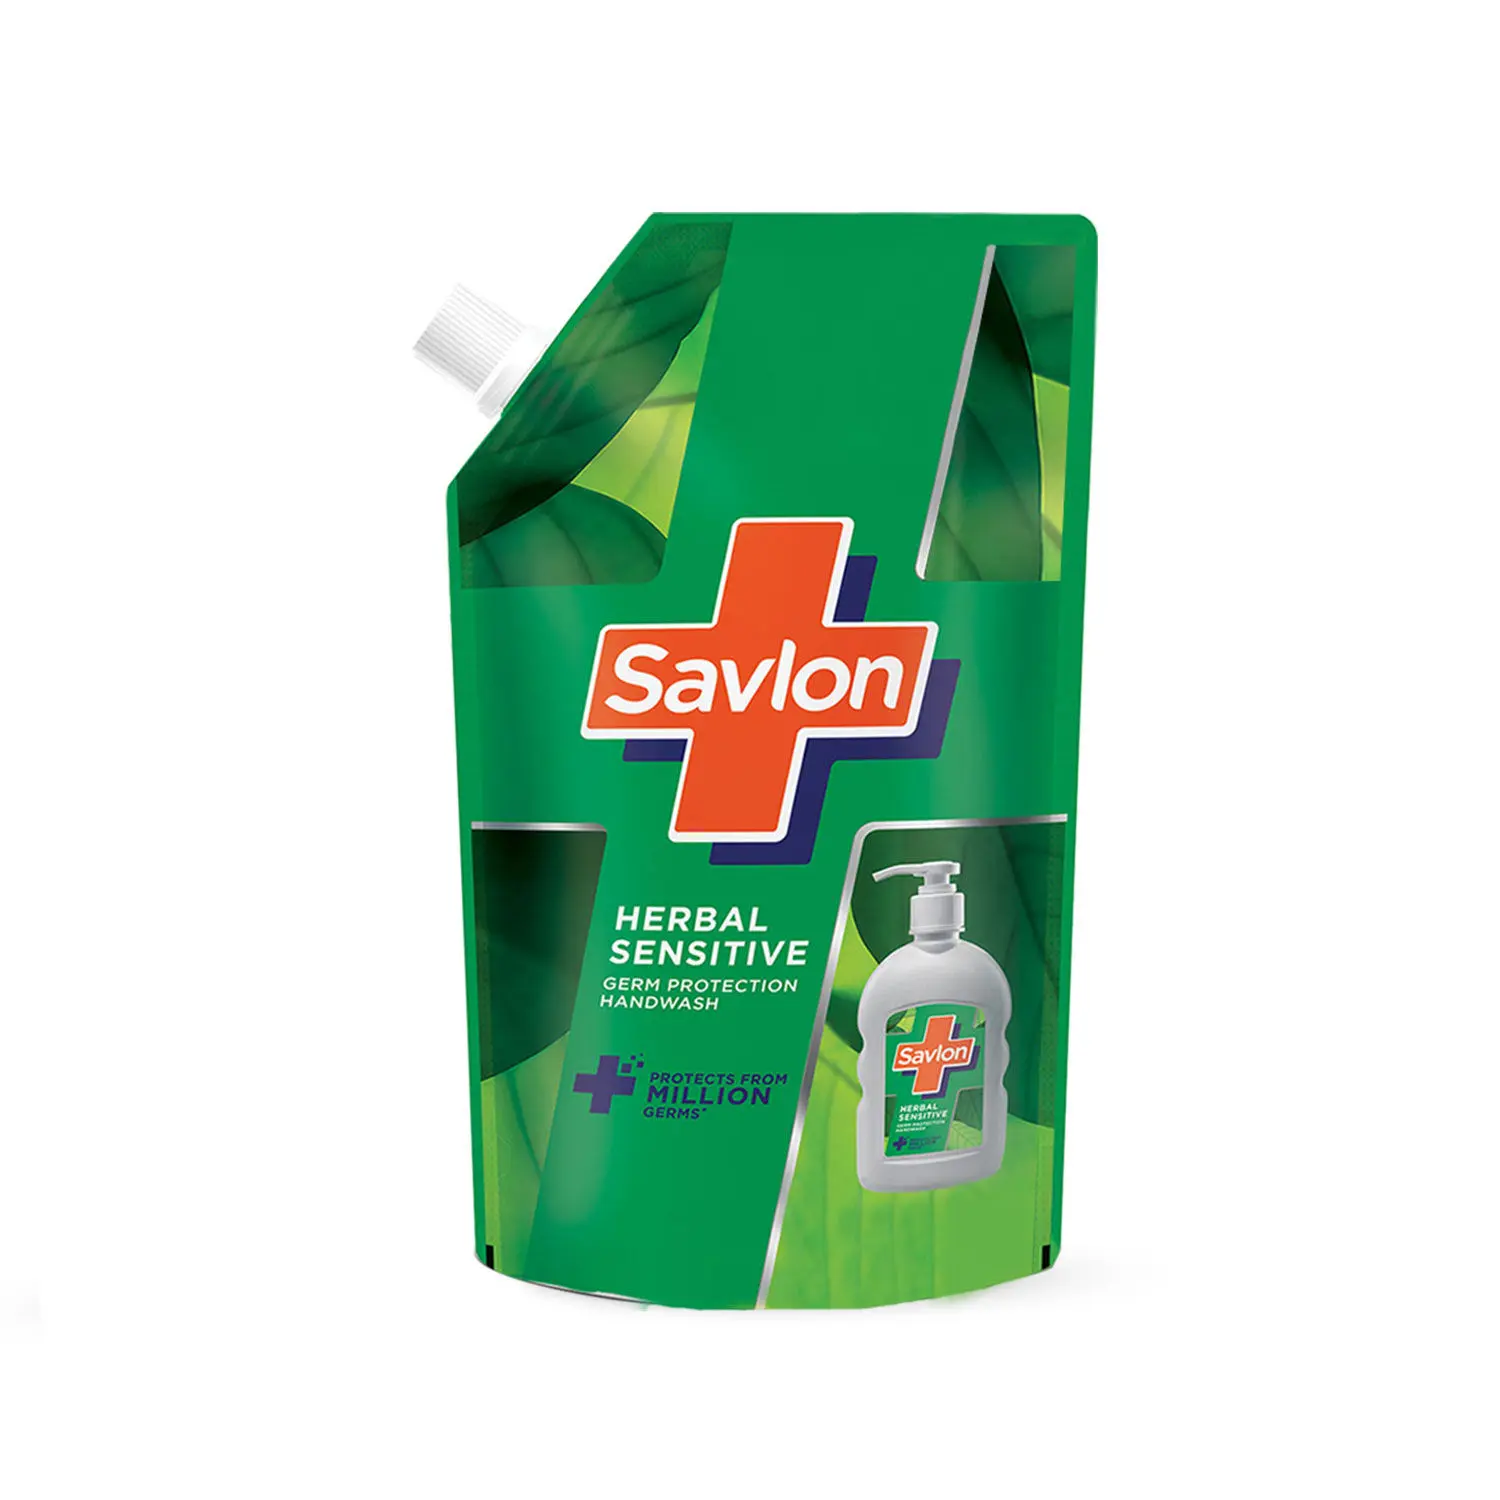 Savlon Herbal Sensitive pH balanced Liquid Handwash Refill Pouch, 725ml